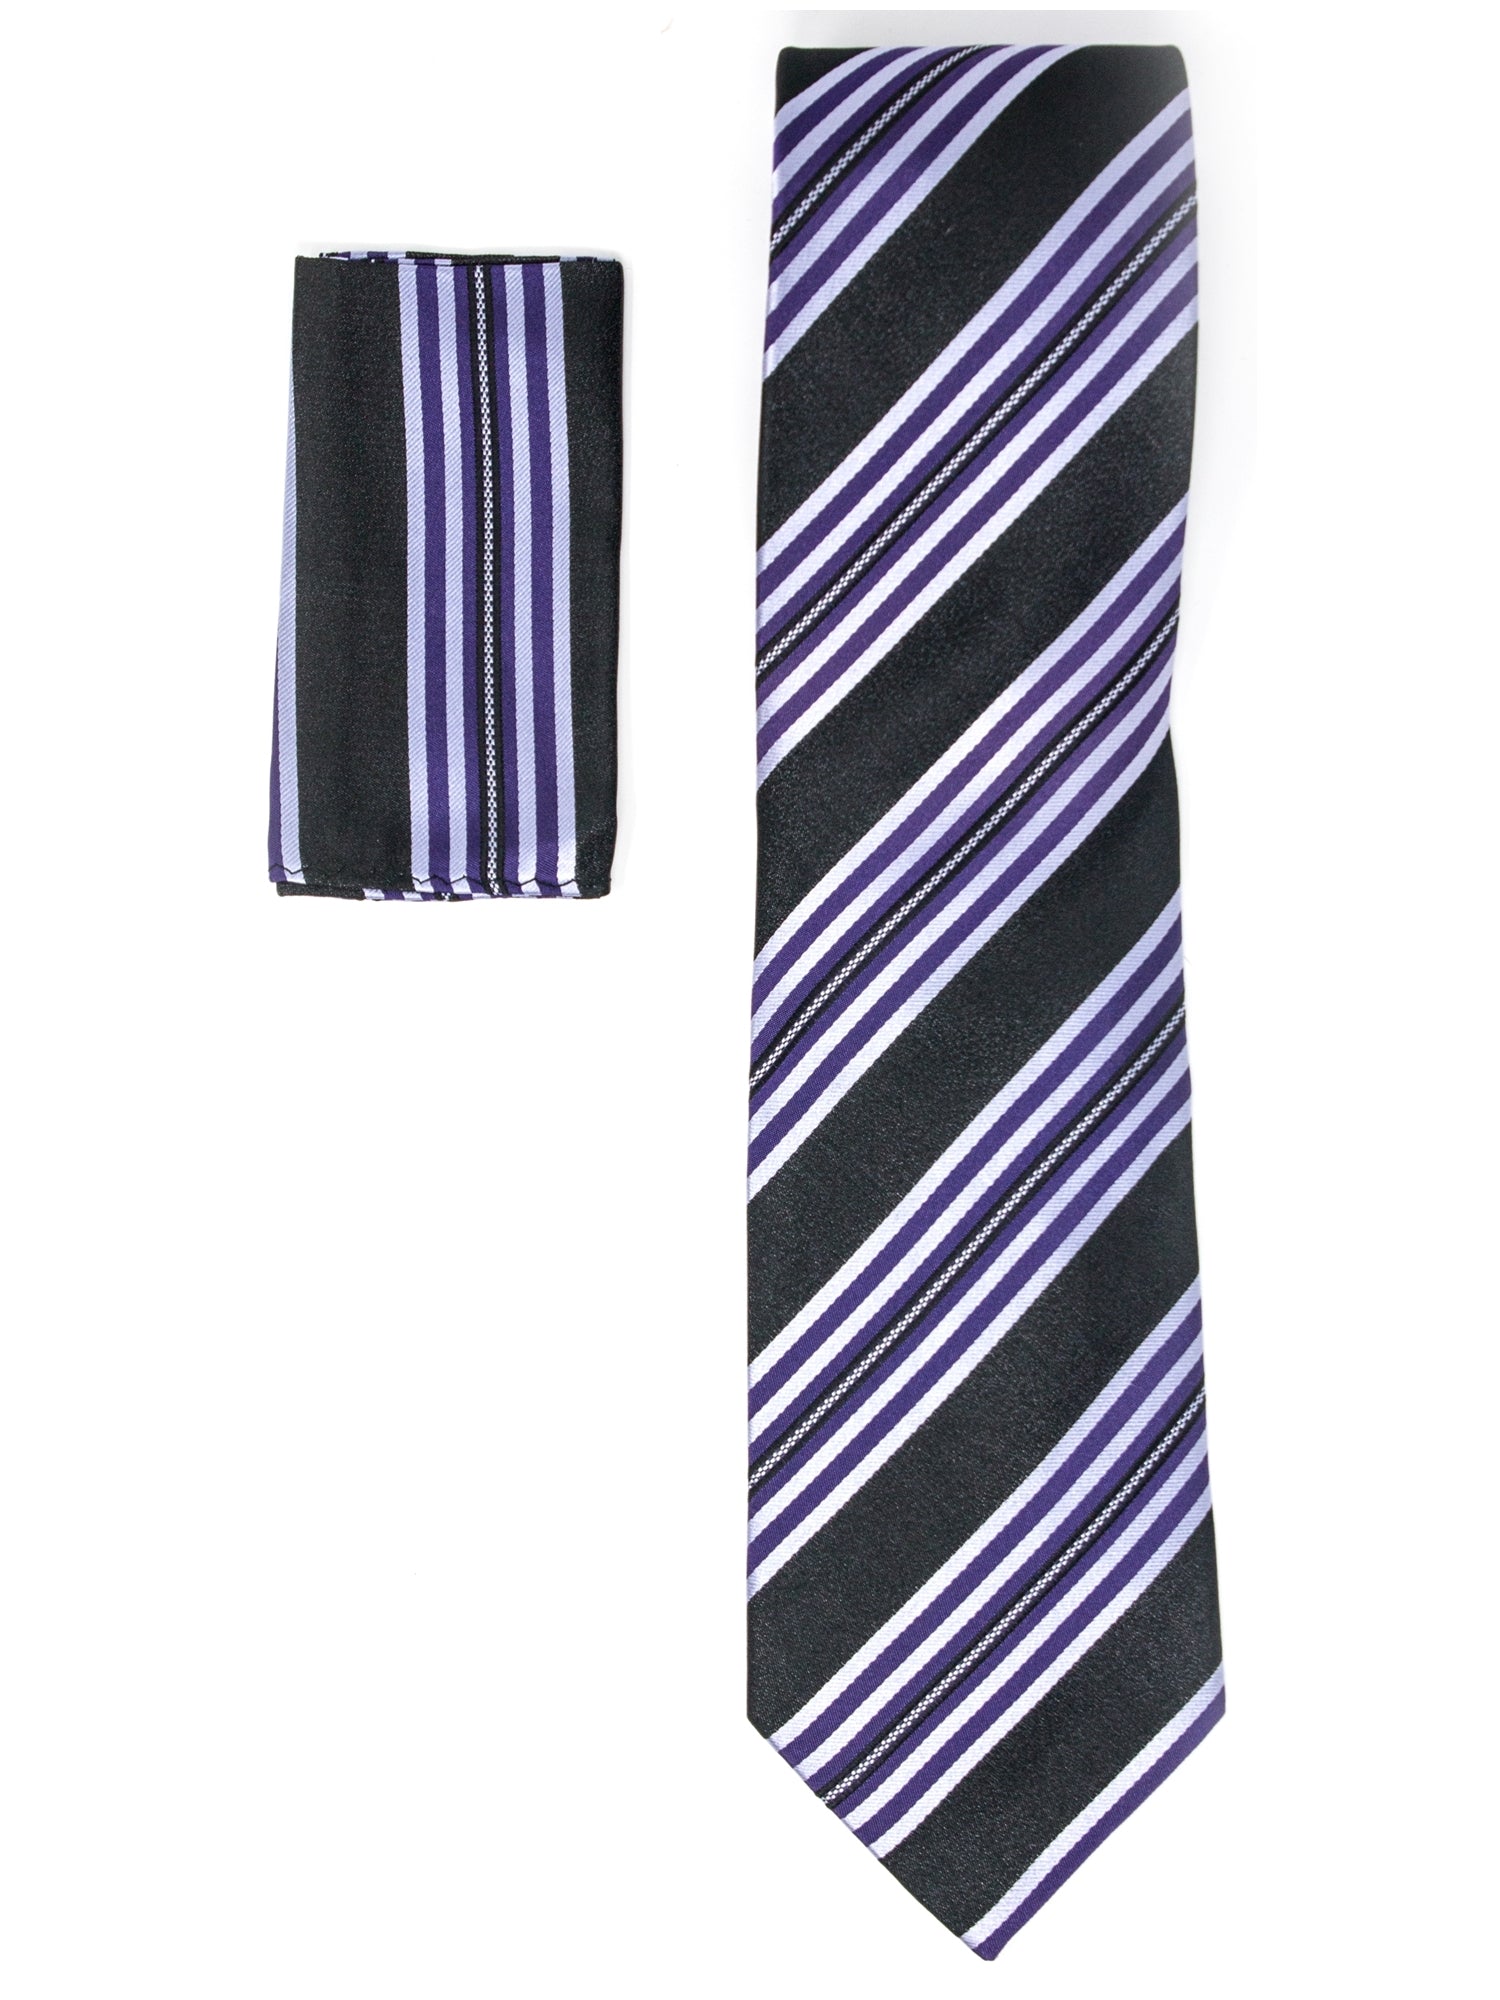 Men's Silk Woven Wedding Neck Tie With Handkerchief Neck Tie TheDapperTie Black, White & Purple Stripe Regular 